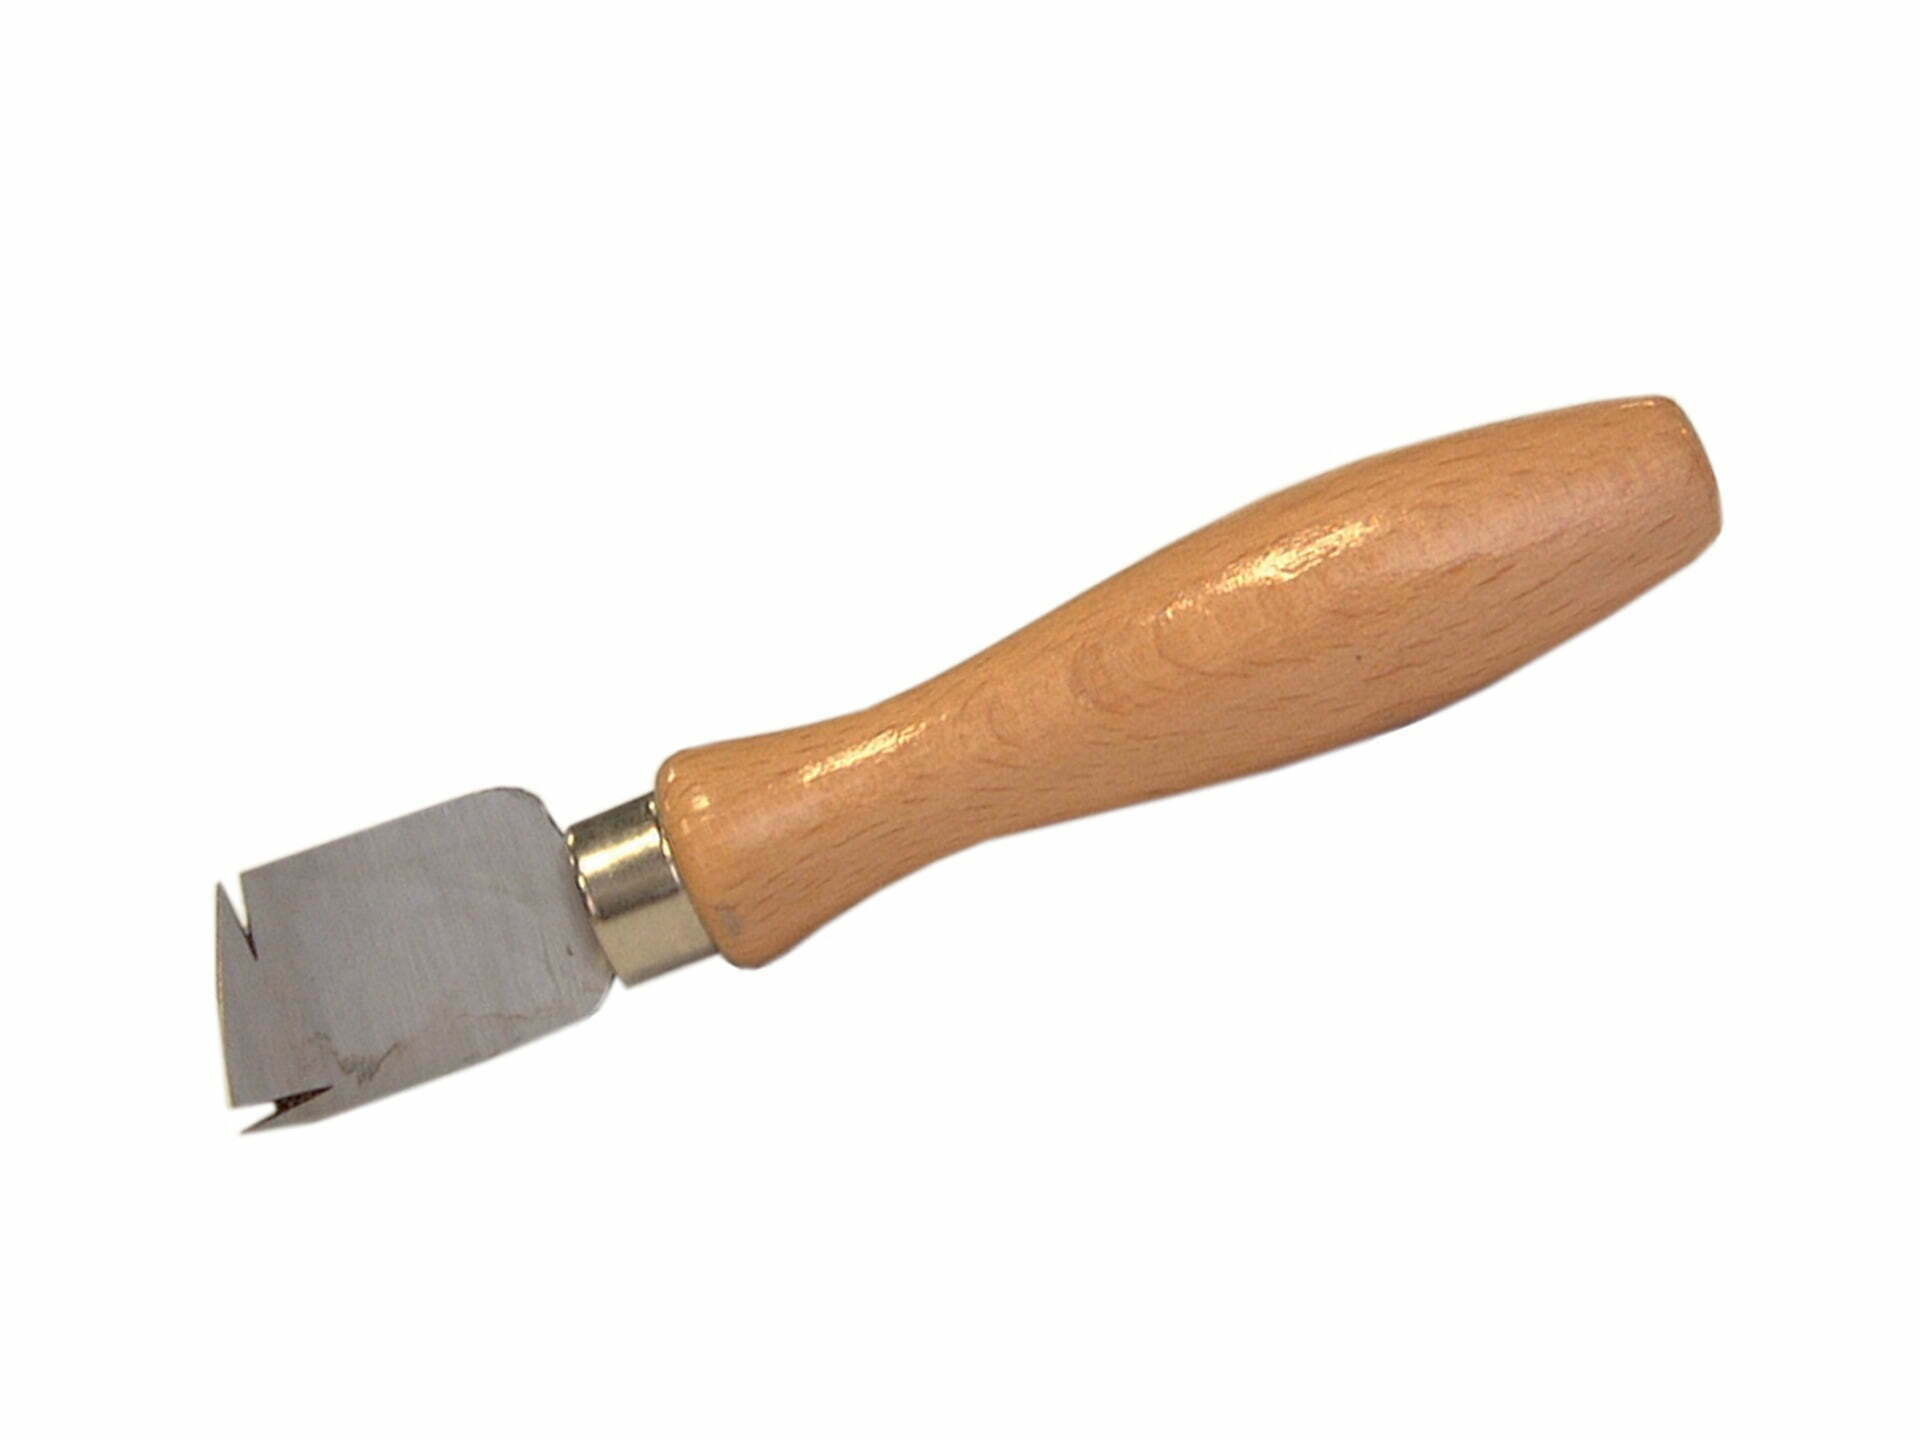 Hook knife for conveyor belt splicing : r/specializedtools